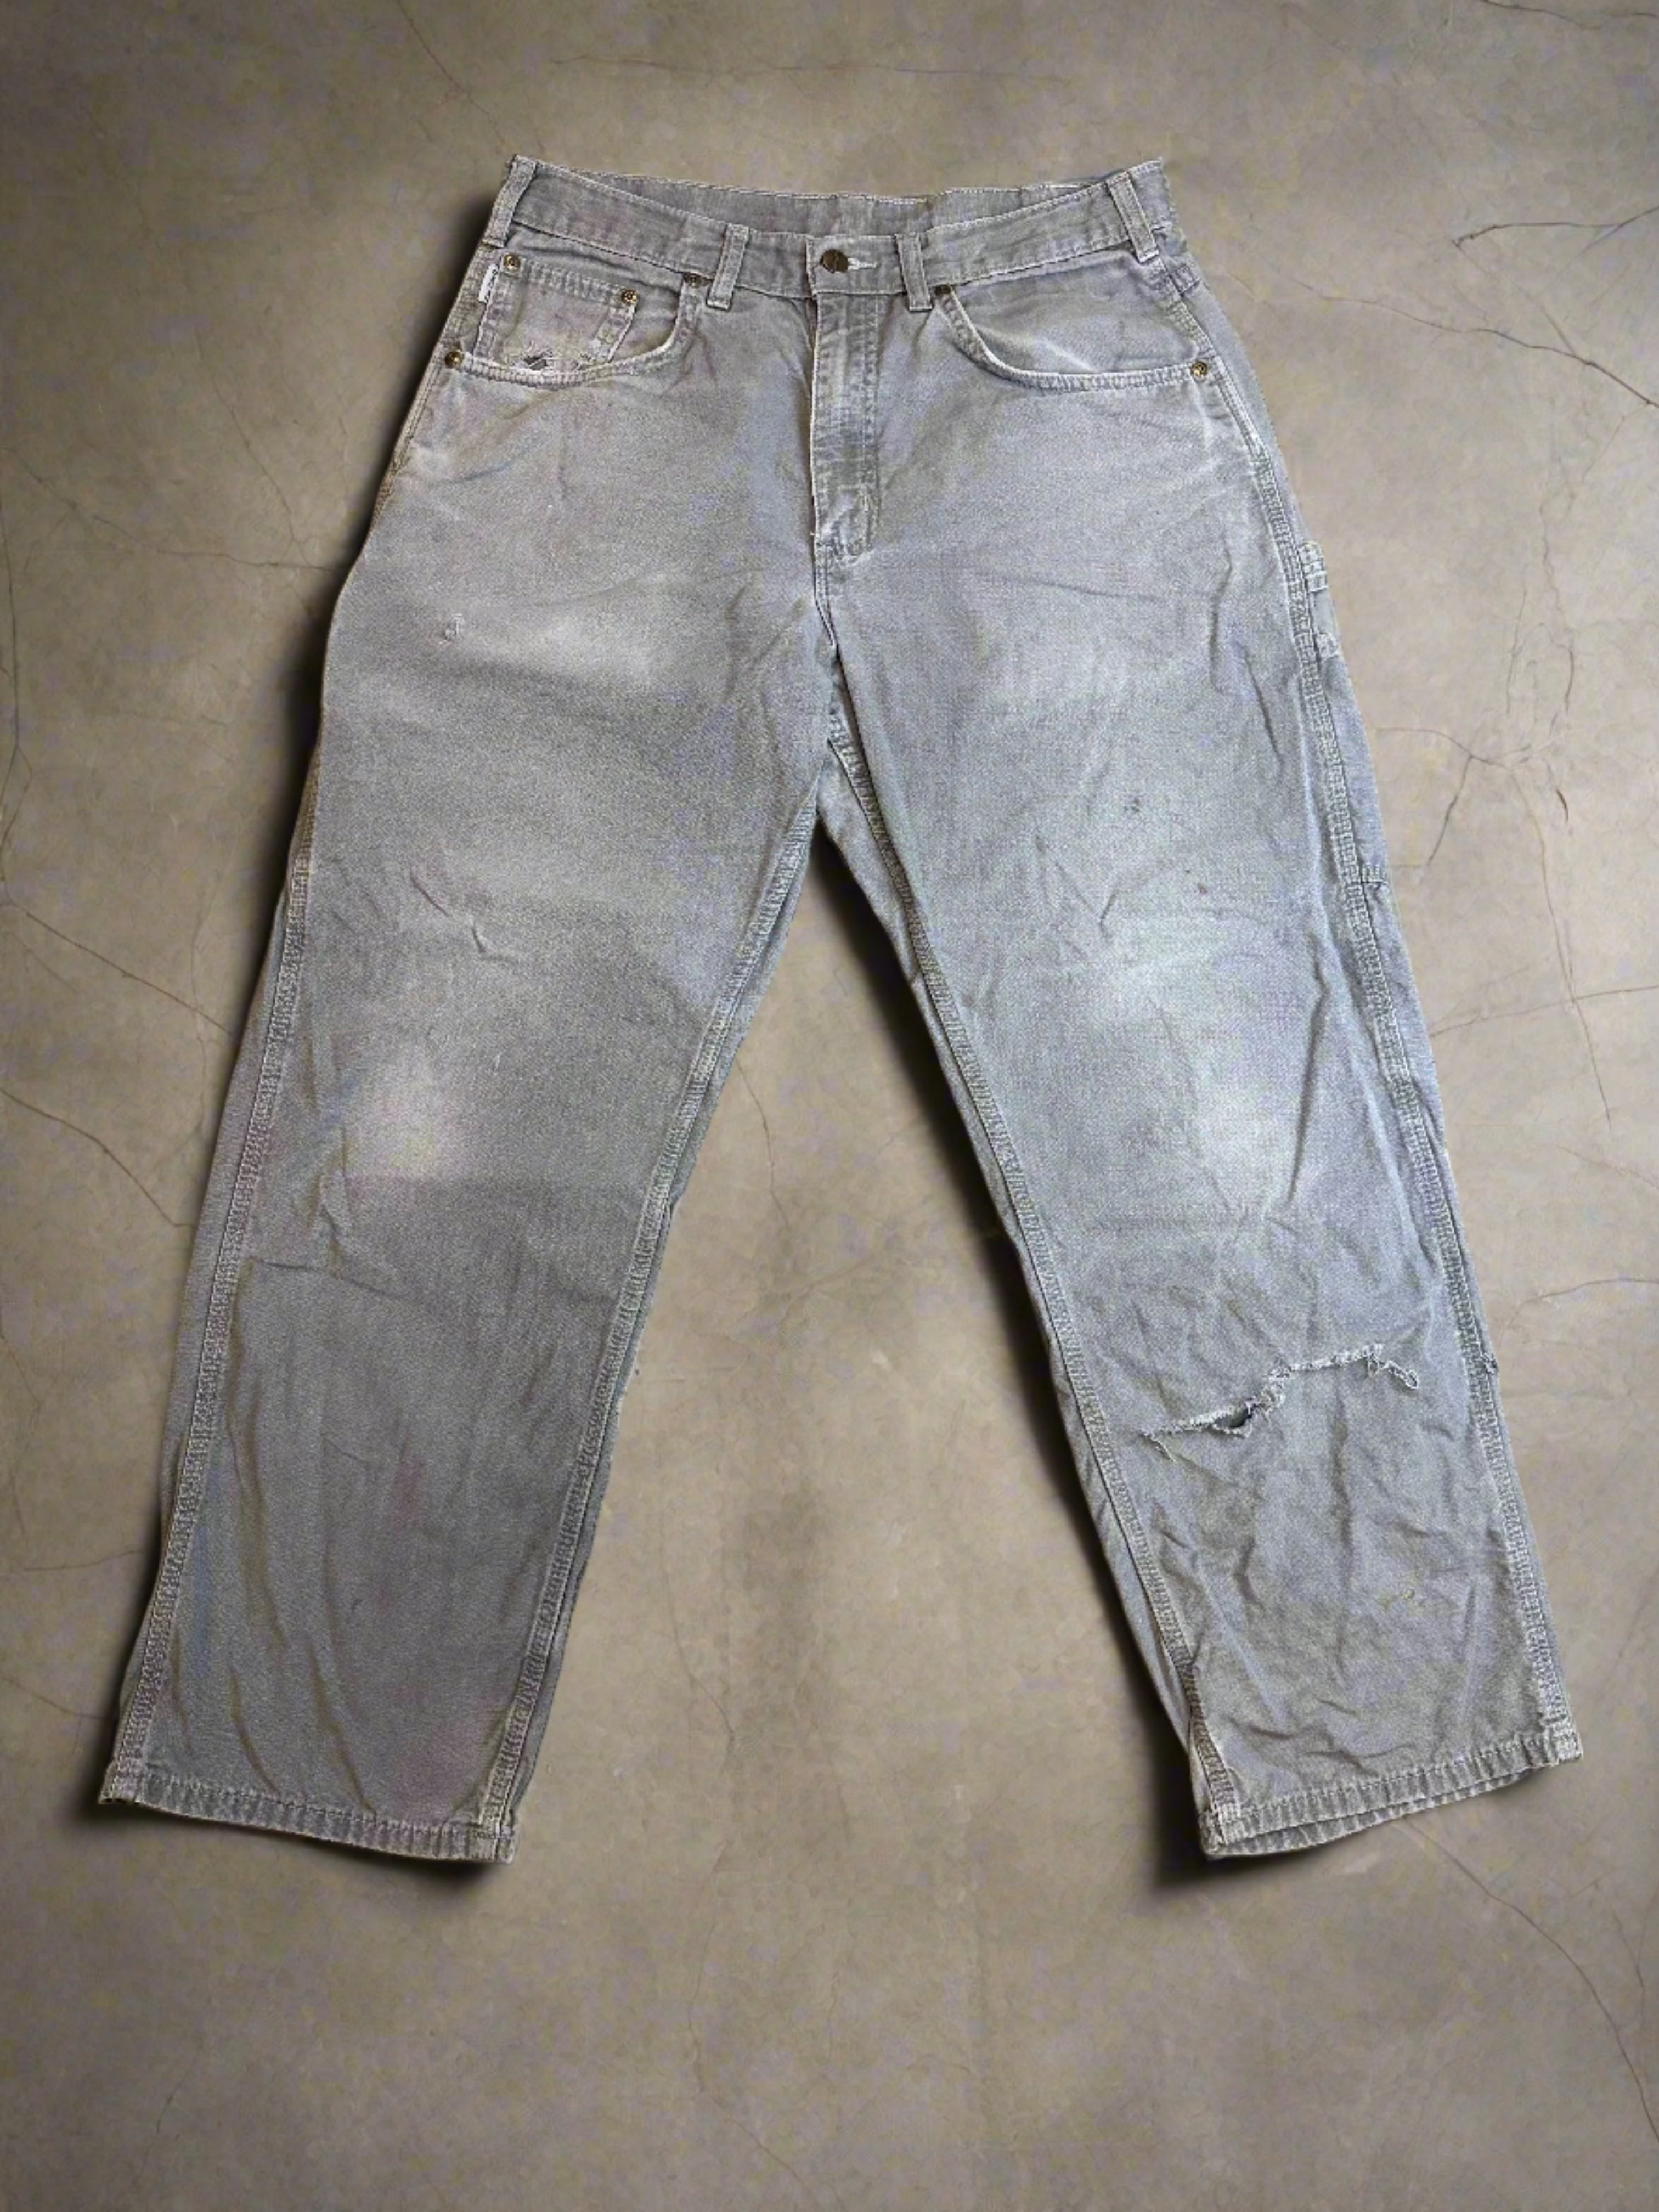 Vintage Carhartt Carpenter Pants - size 33x30